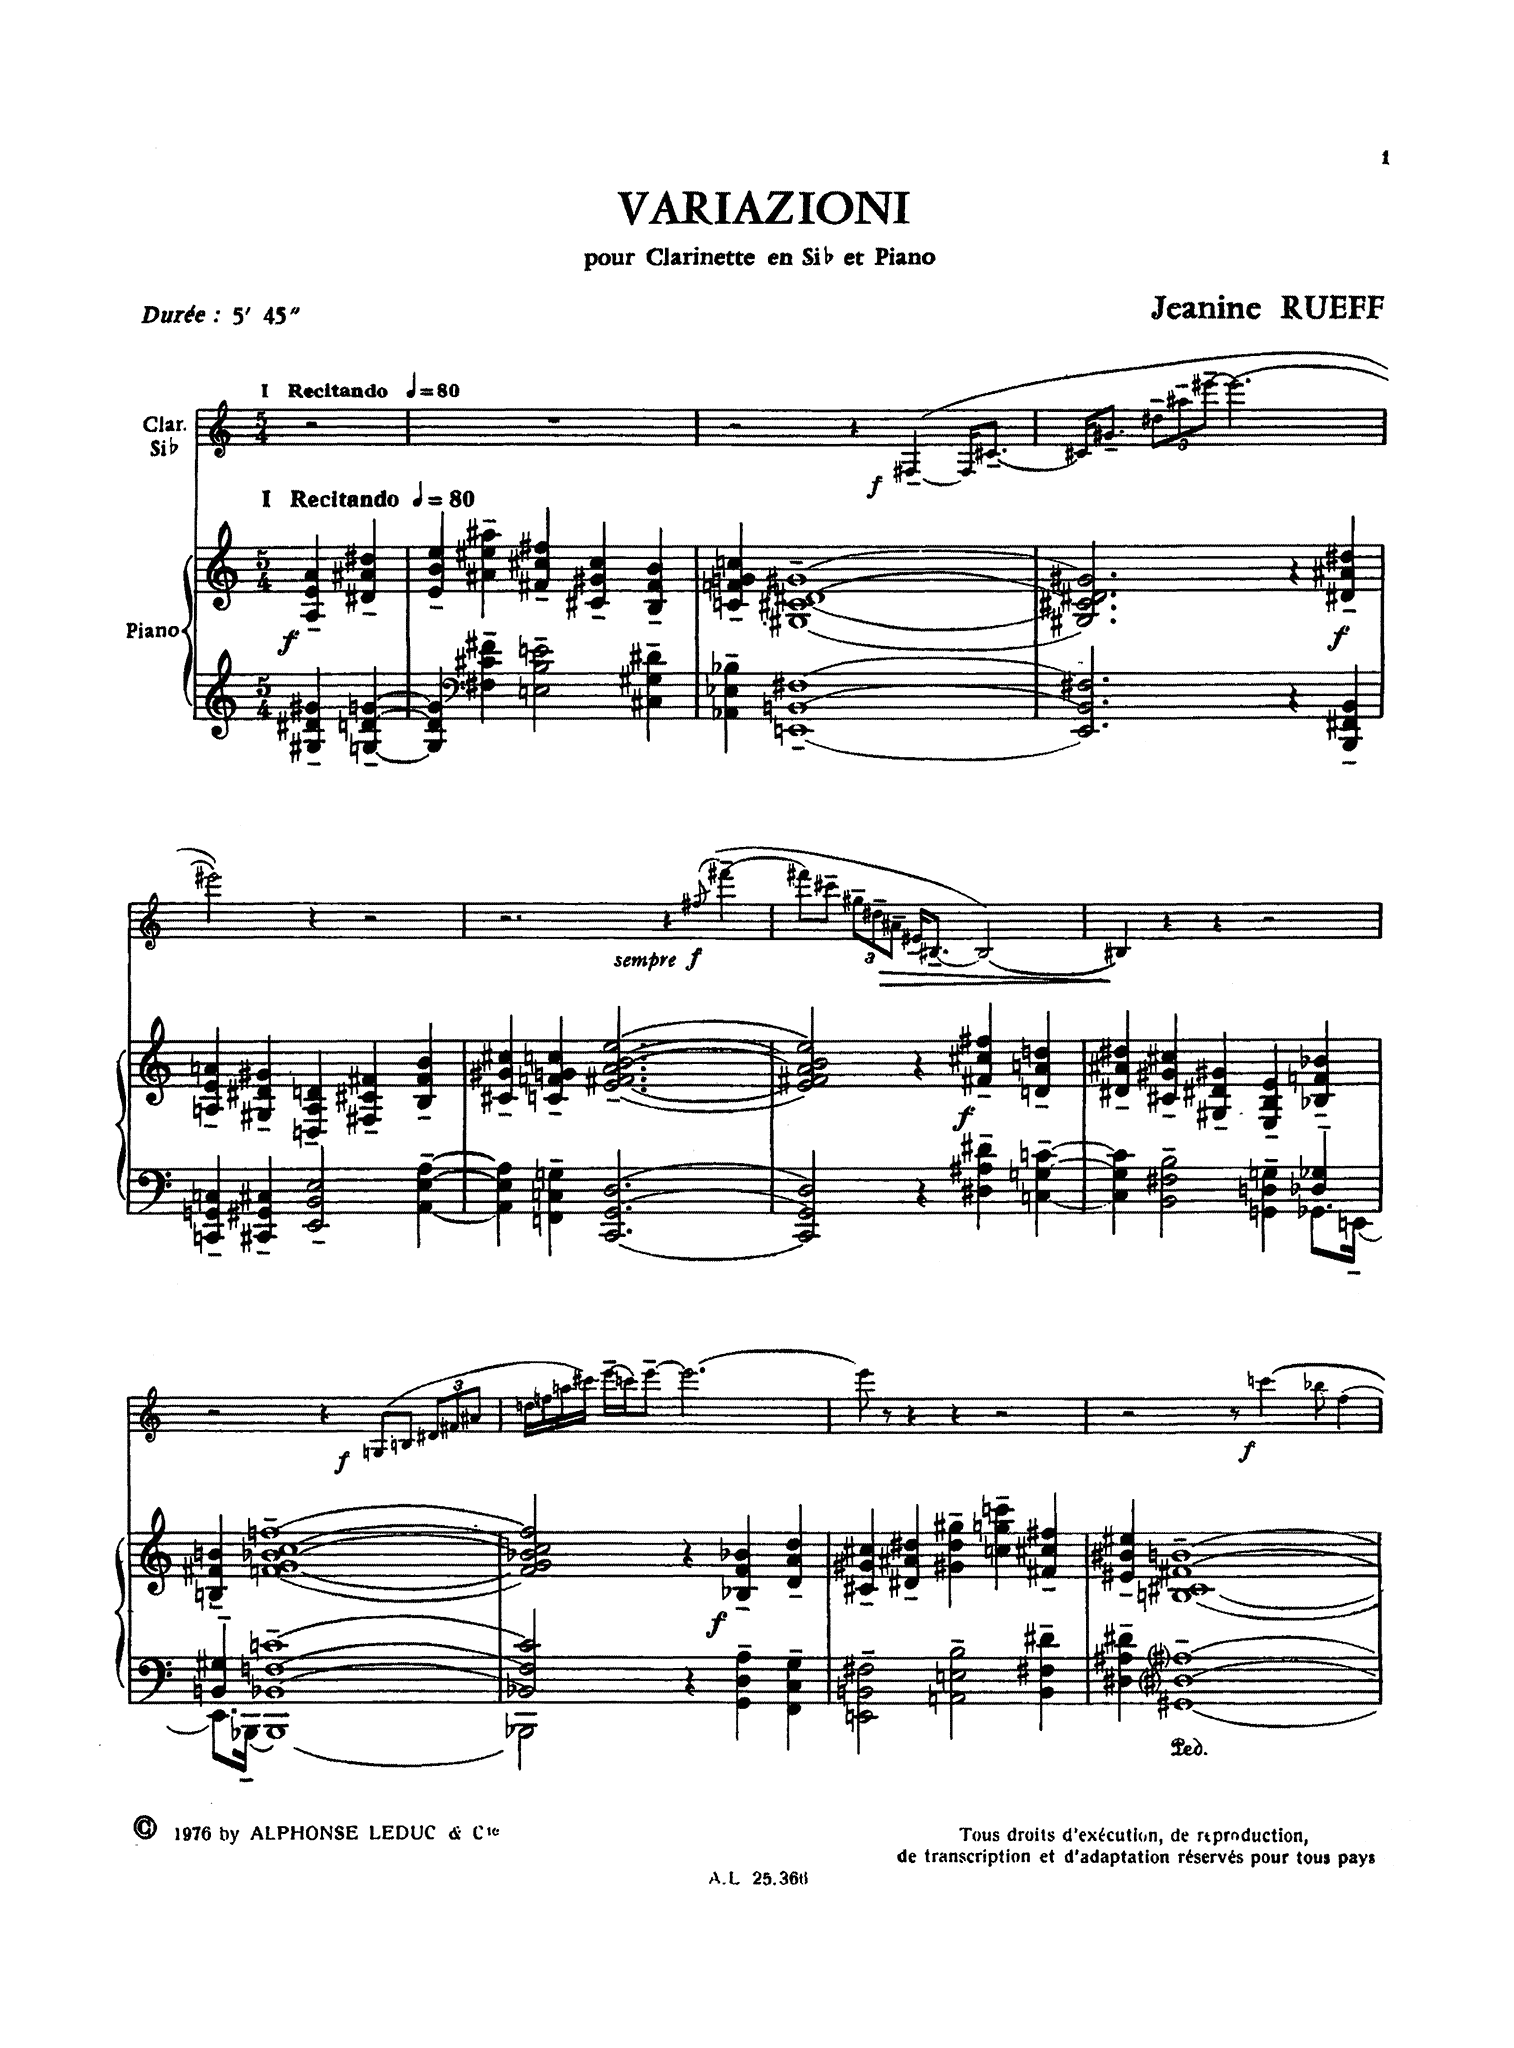 Jeanine Rueff Variazioni clarinet and piano score